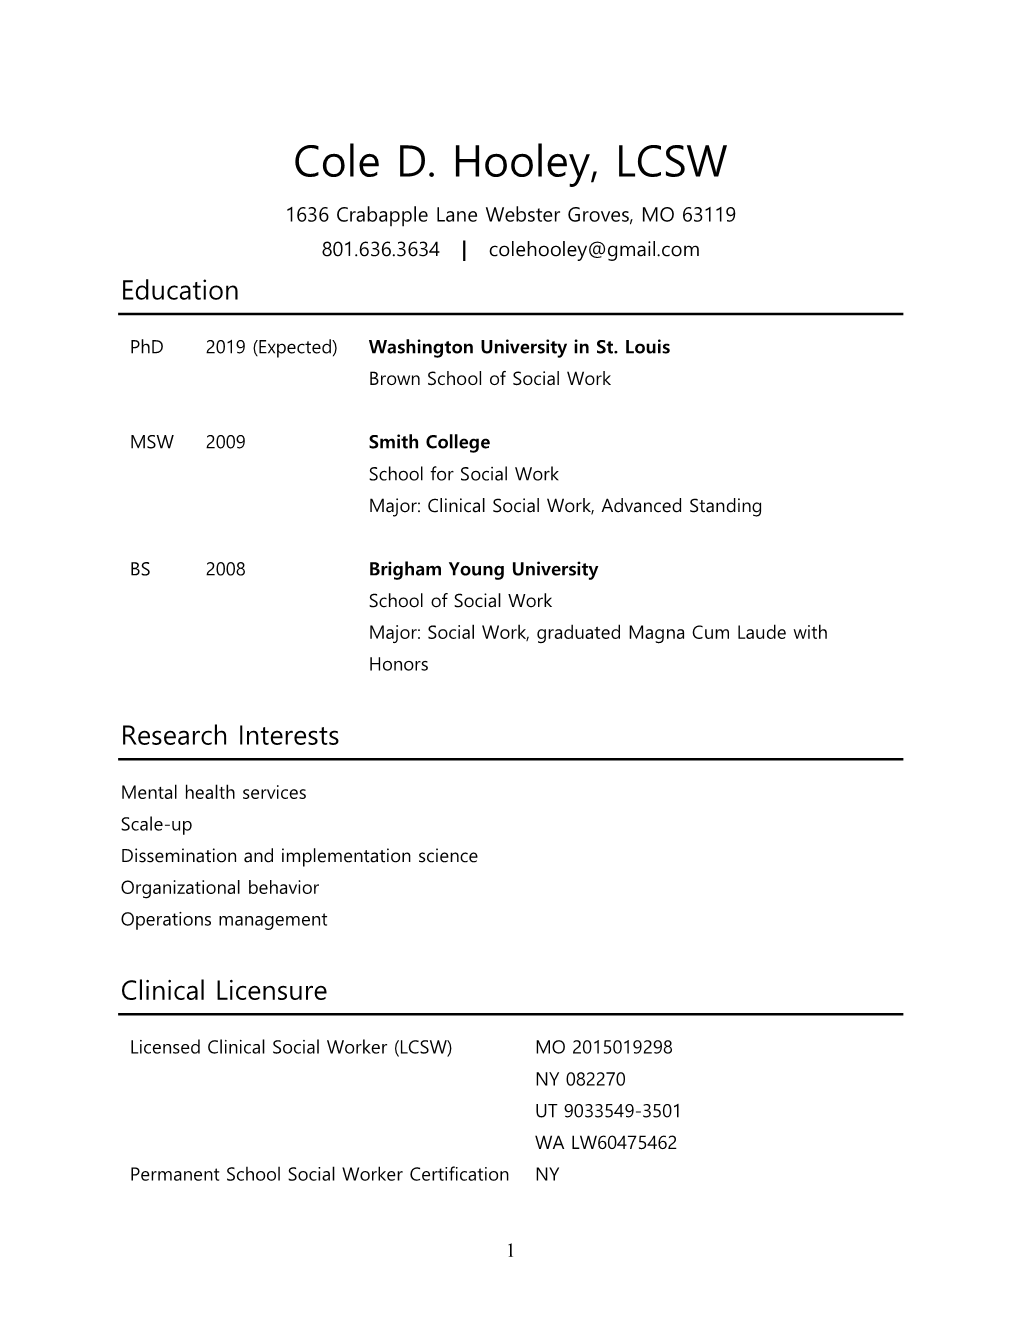 Cole Hooley CV-R .Docx